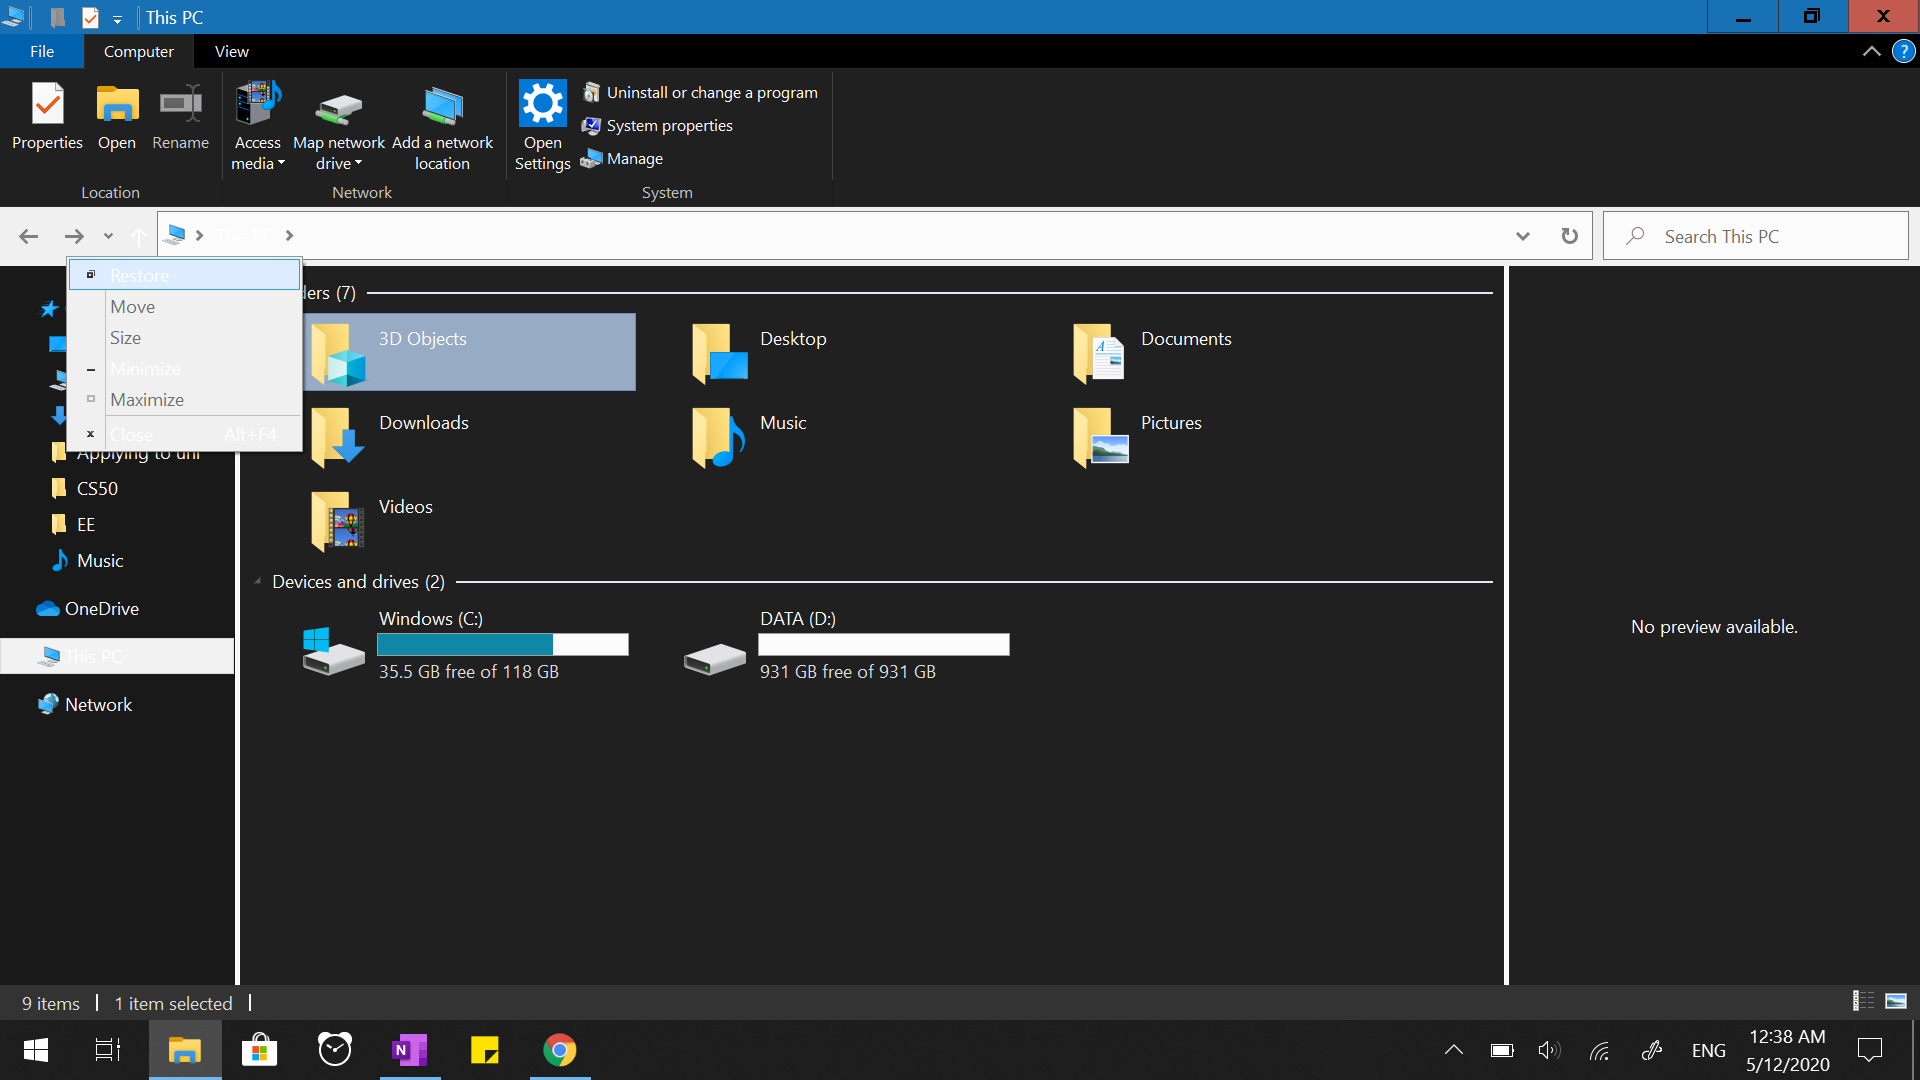 Windows 10 Dark Theme - Files Explorer Stuck in Between Both Color Themes 1eb43199-b320-421f-9c5b-23a443d66102?upload=true.png